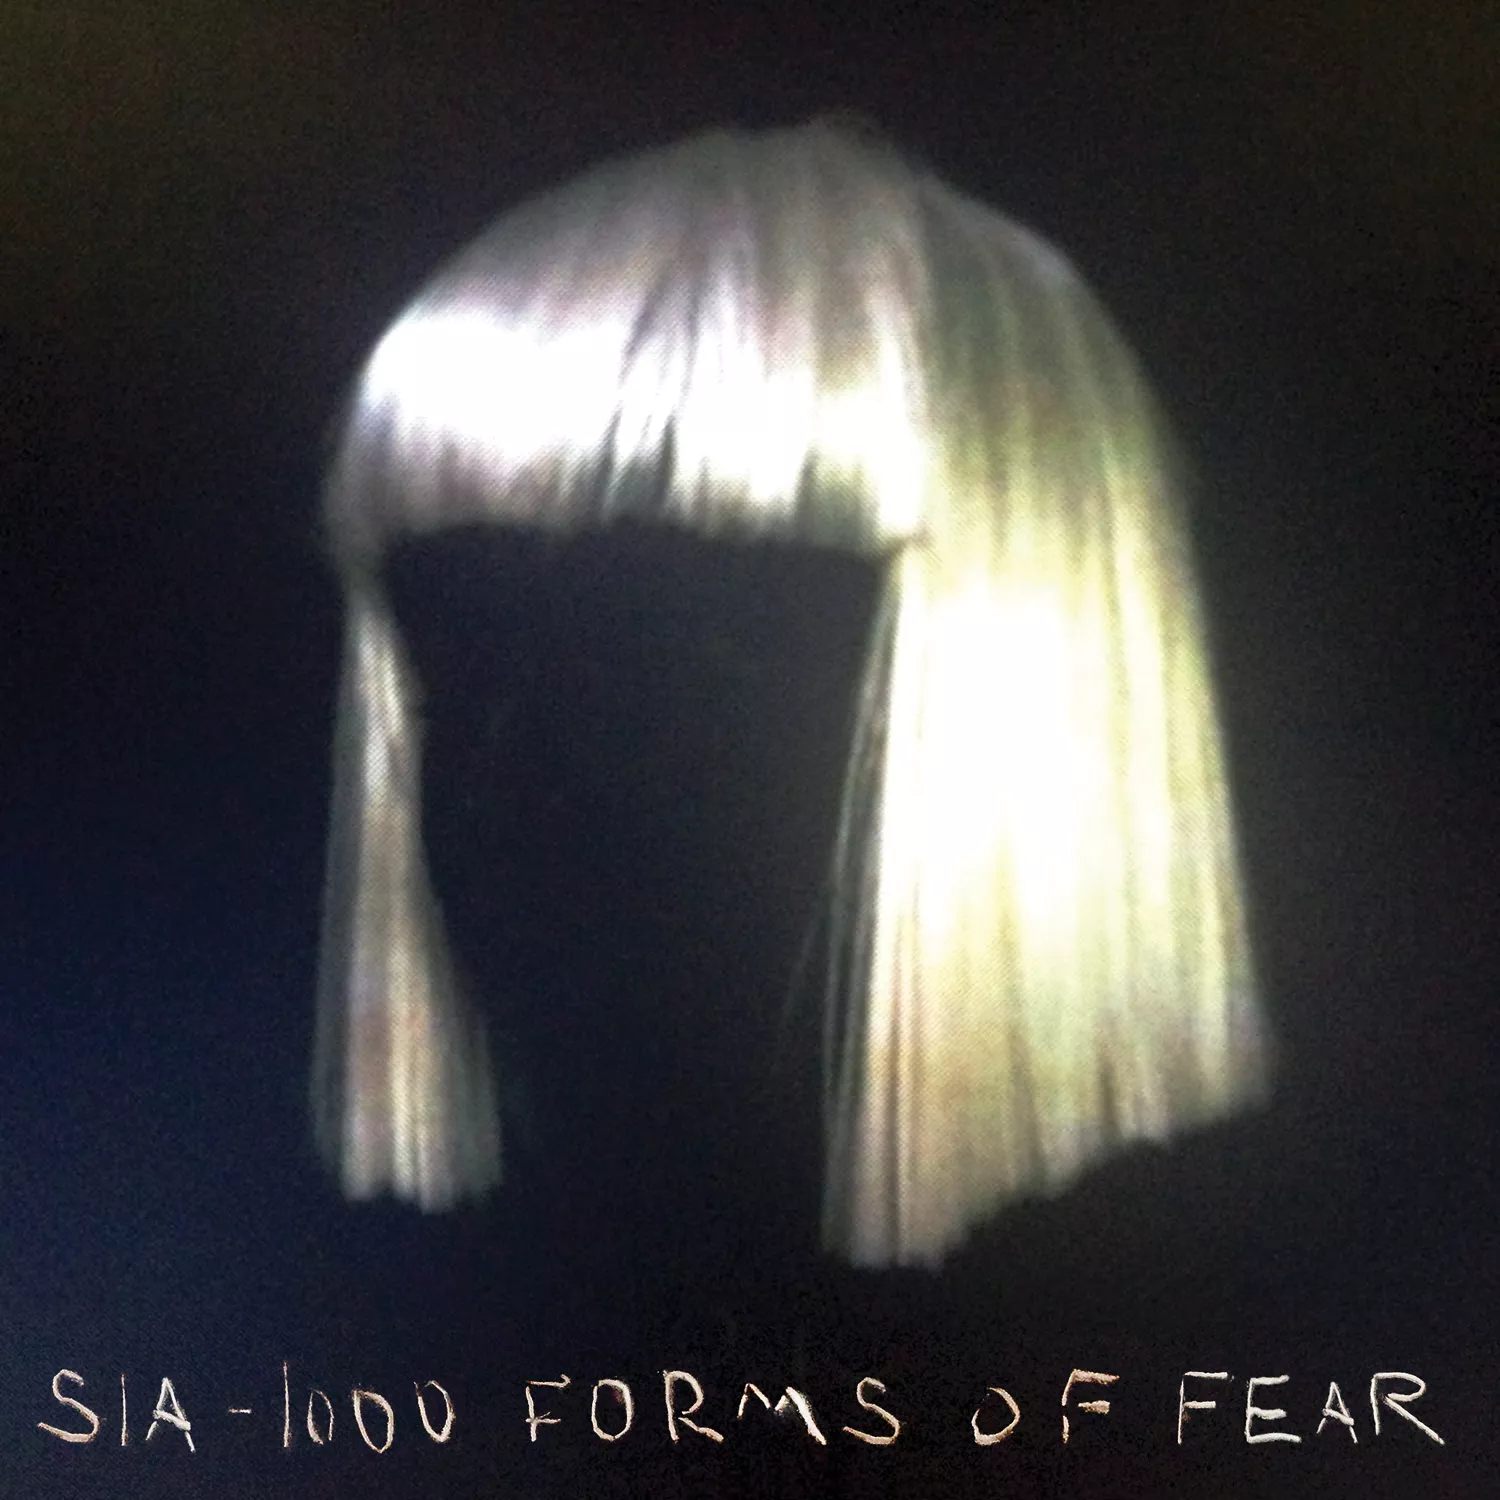 Lyt til Sias festlige nye single